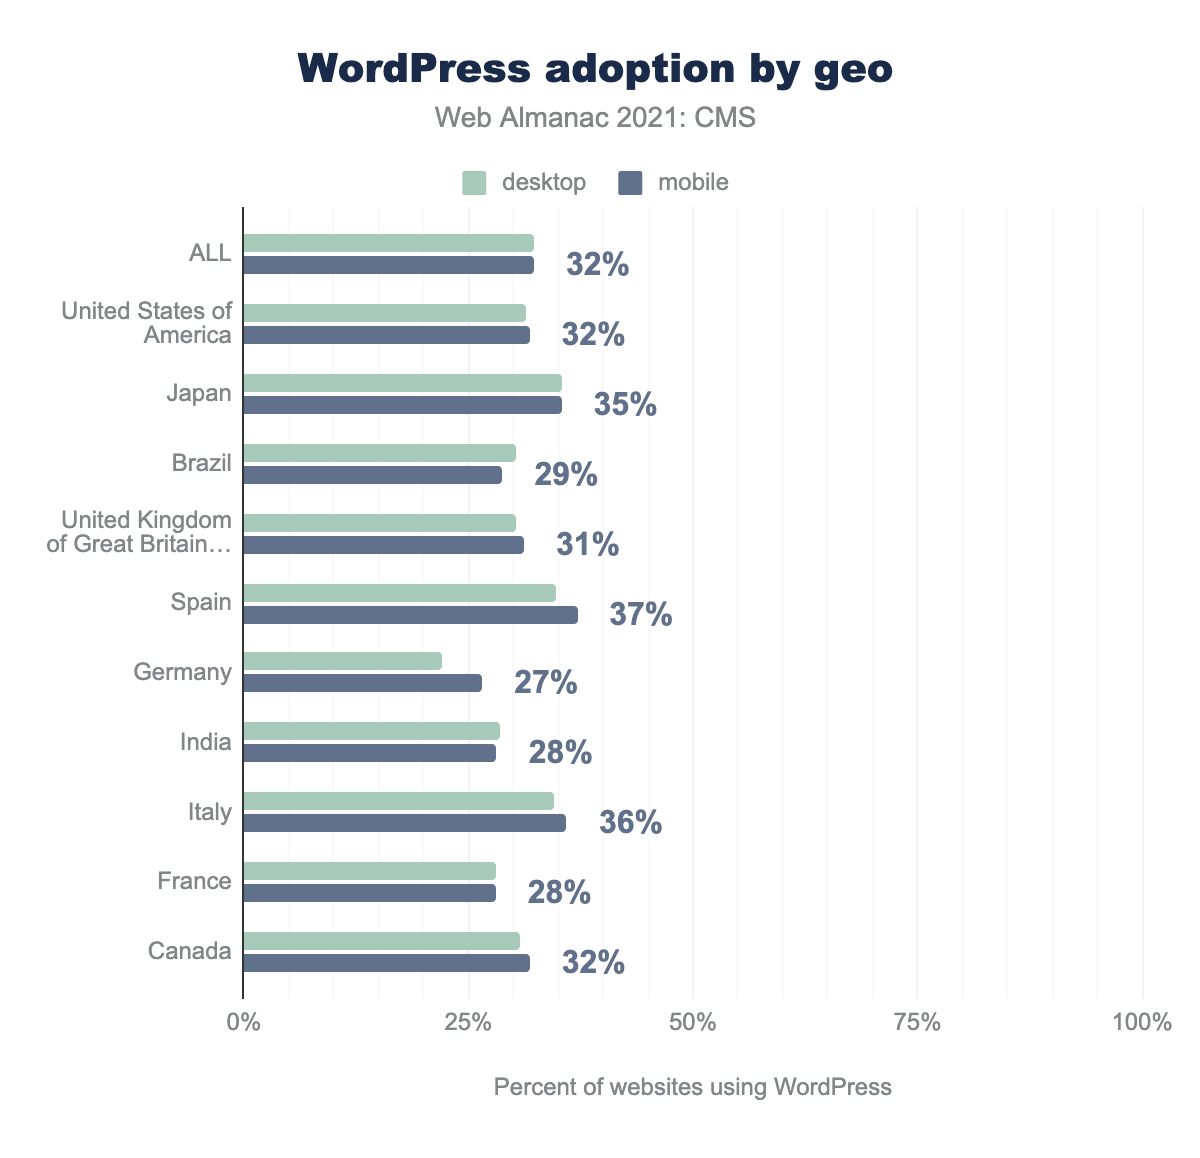 WordPressの国別採用状況。